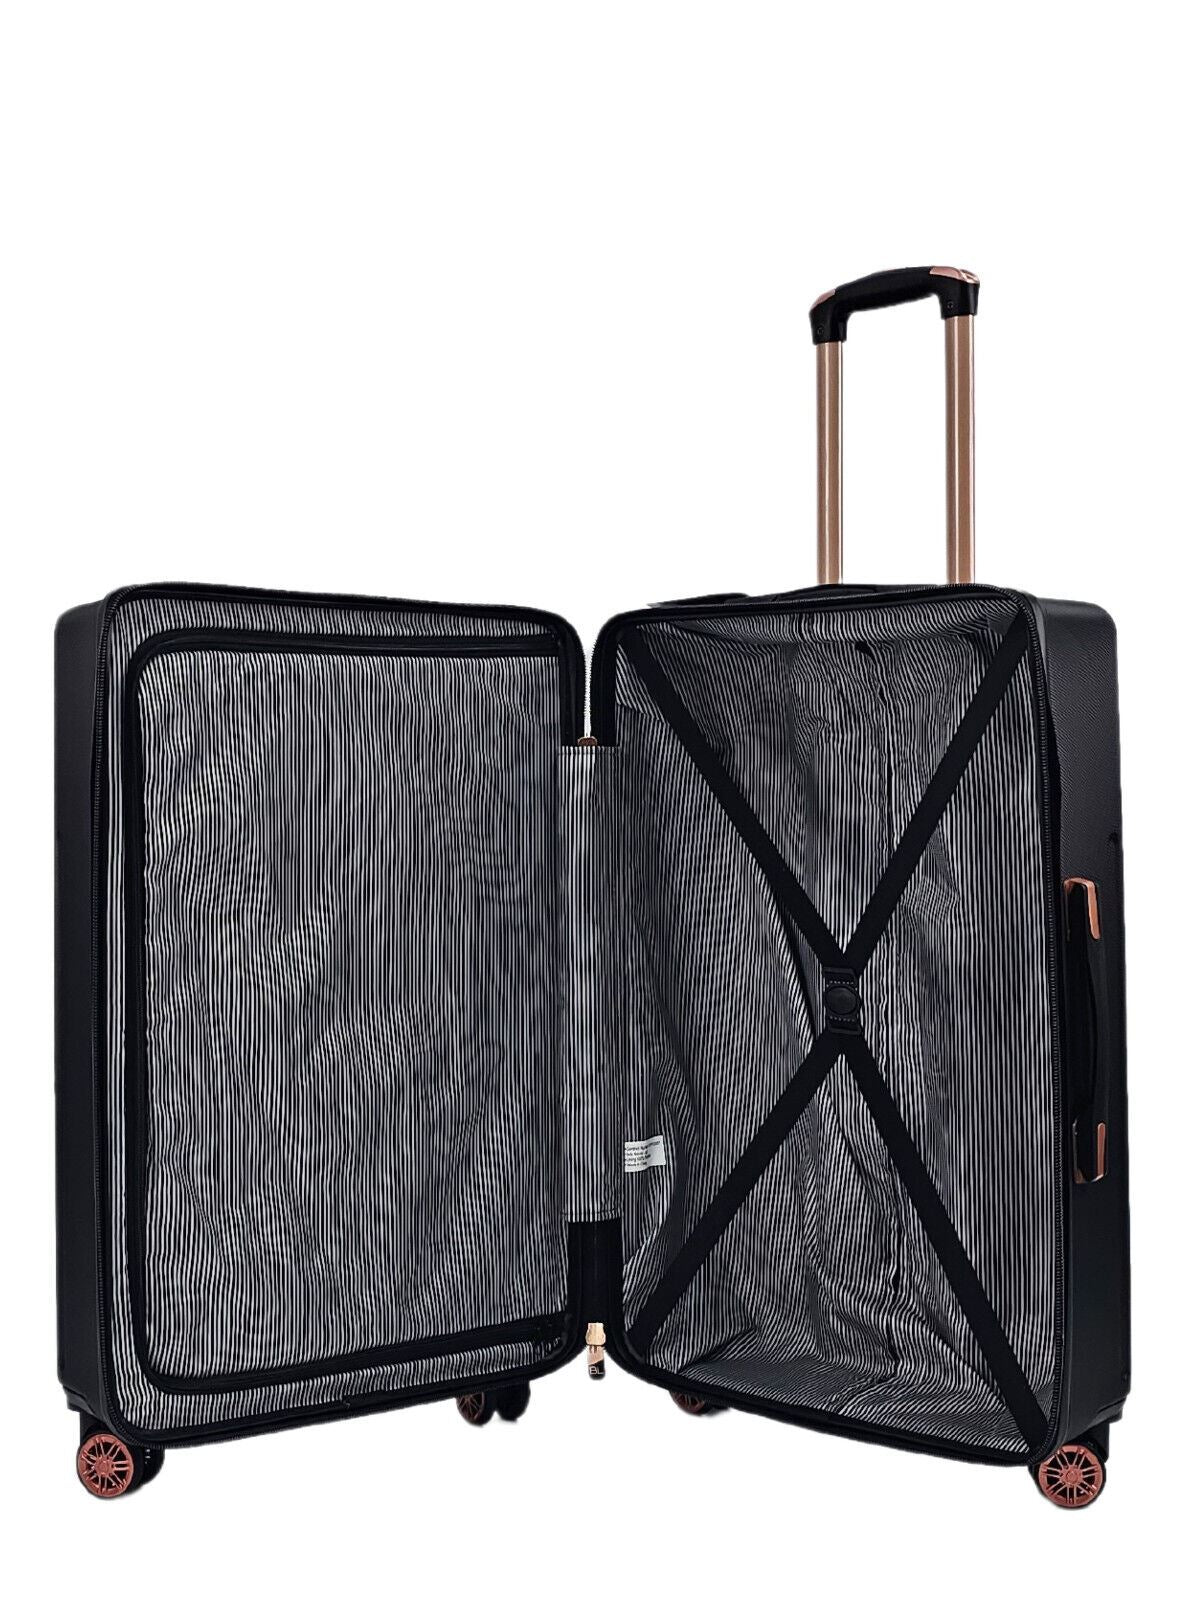 Columbia Medium Soft Shell Suitcase in Black